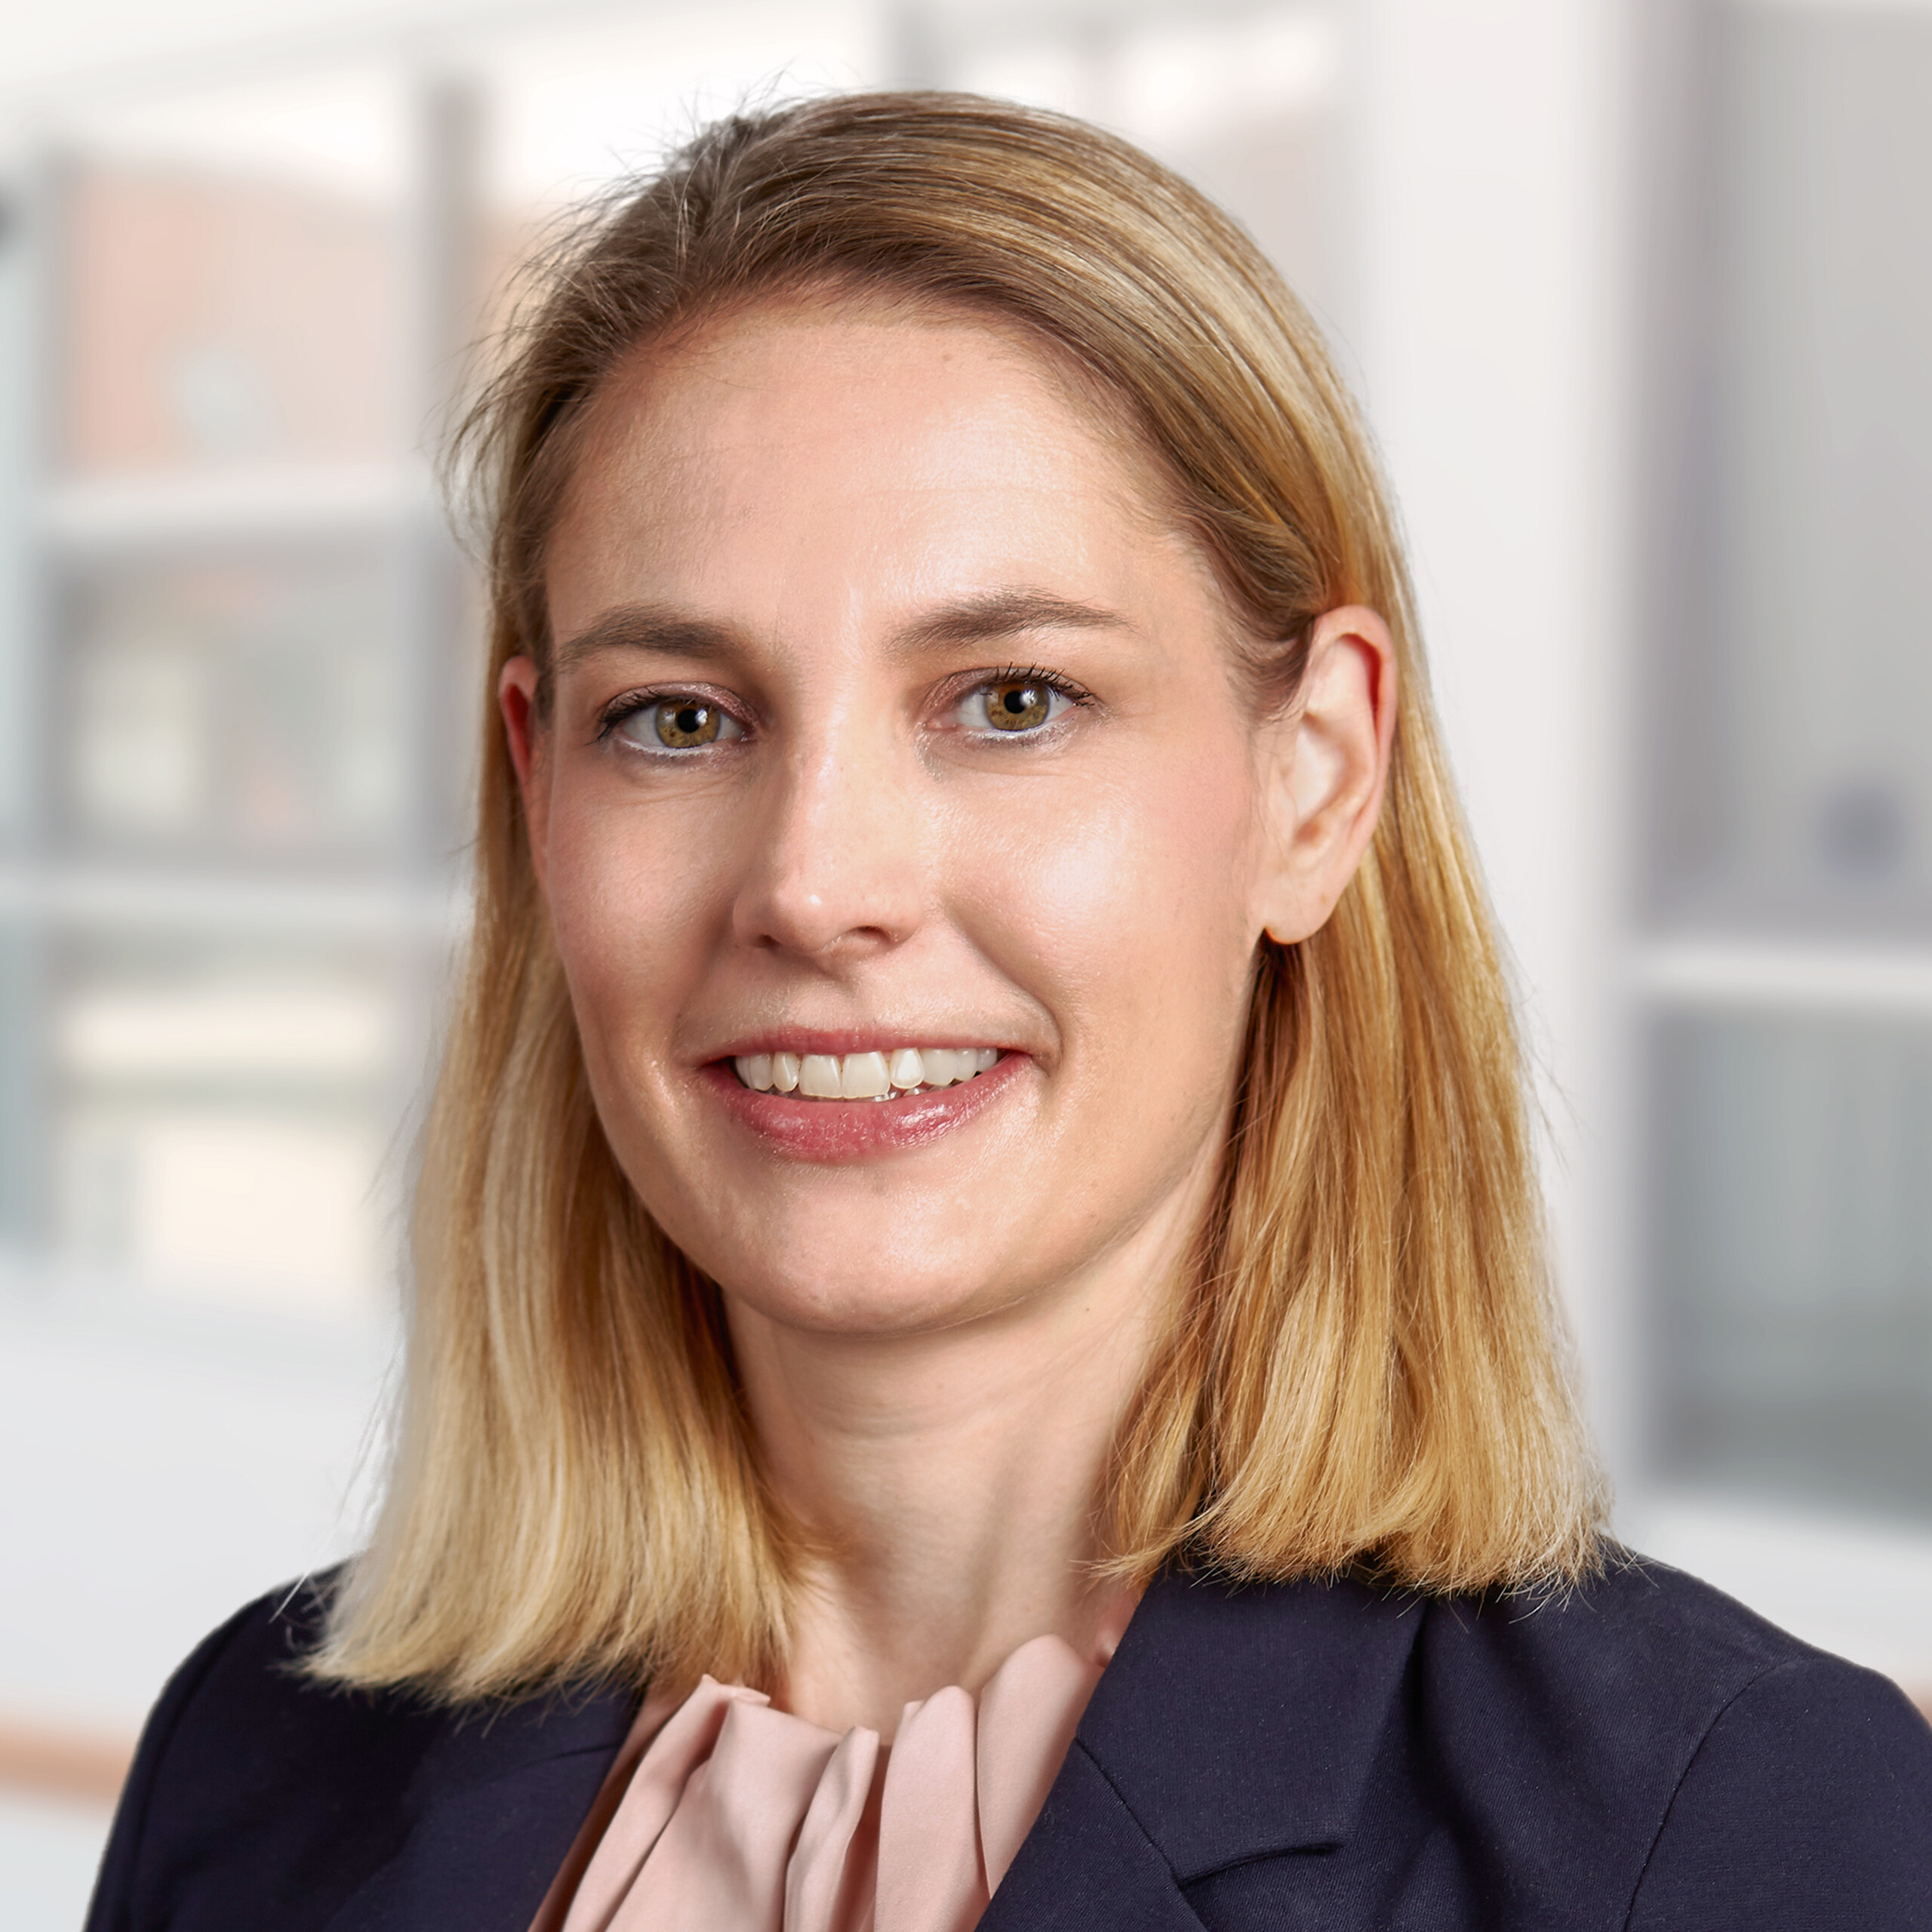 Nicole Pötsch, Head of Investments & Strategic Development for North & Central Europe, Allianz Real Estate